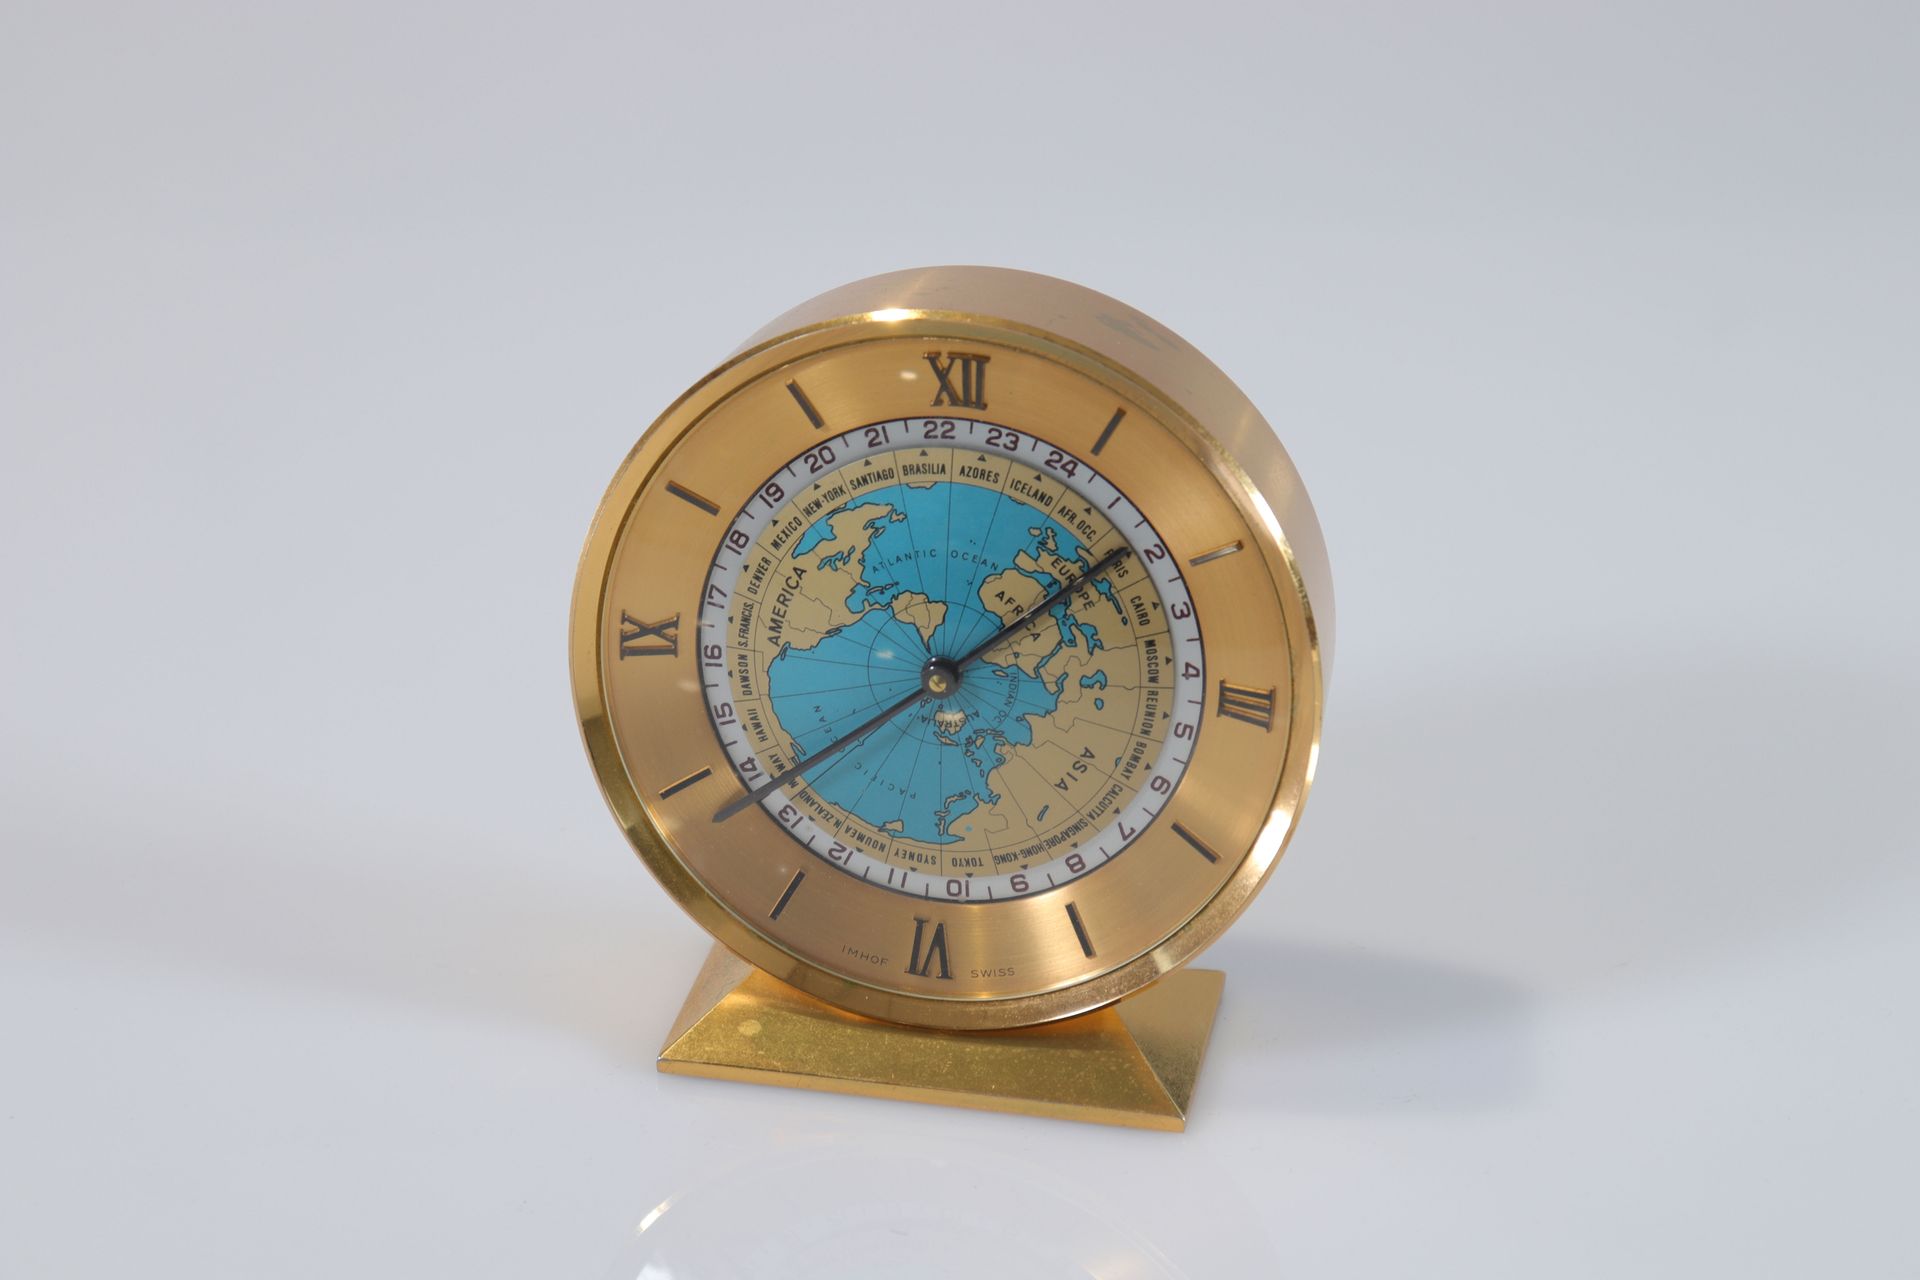 Suisse - Horloge Imhoff - 1960 Switzerland - Imhoff clock - 1960
Period: Xxth
Si&hellip;